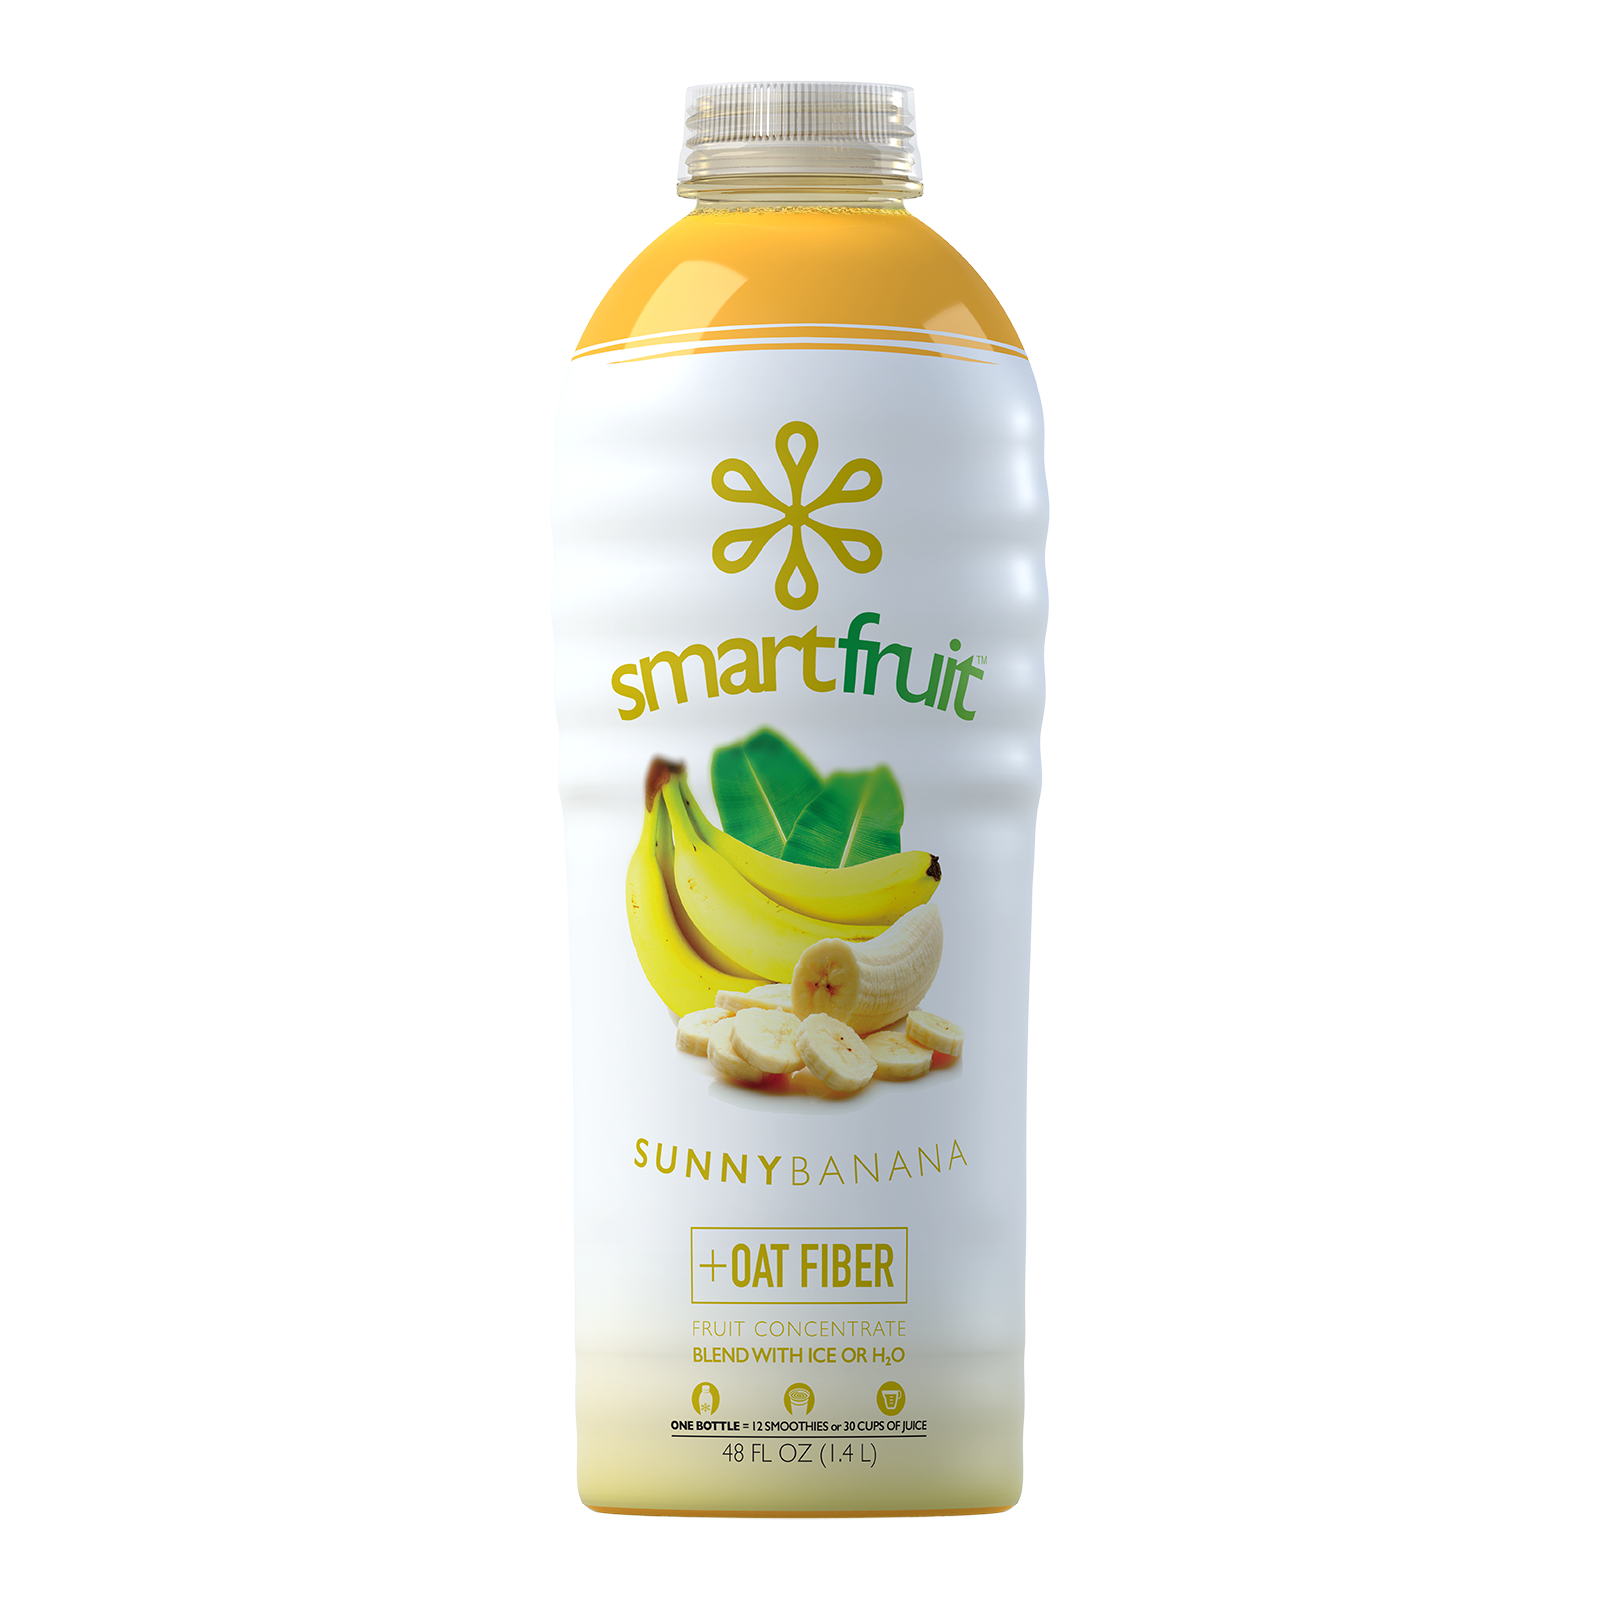 Sunny Banana Smartfruit - 48oz